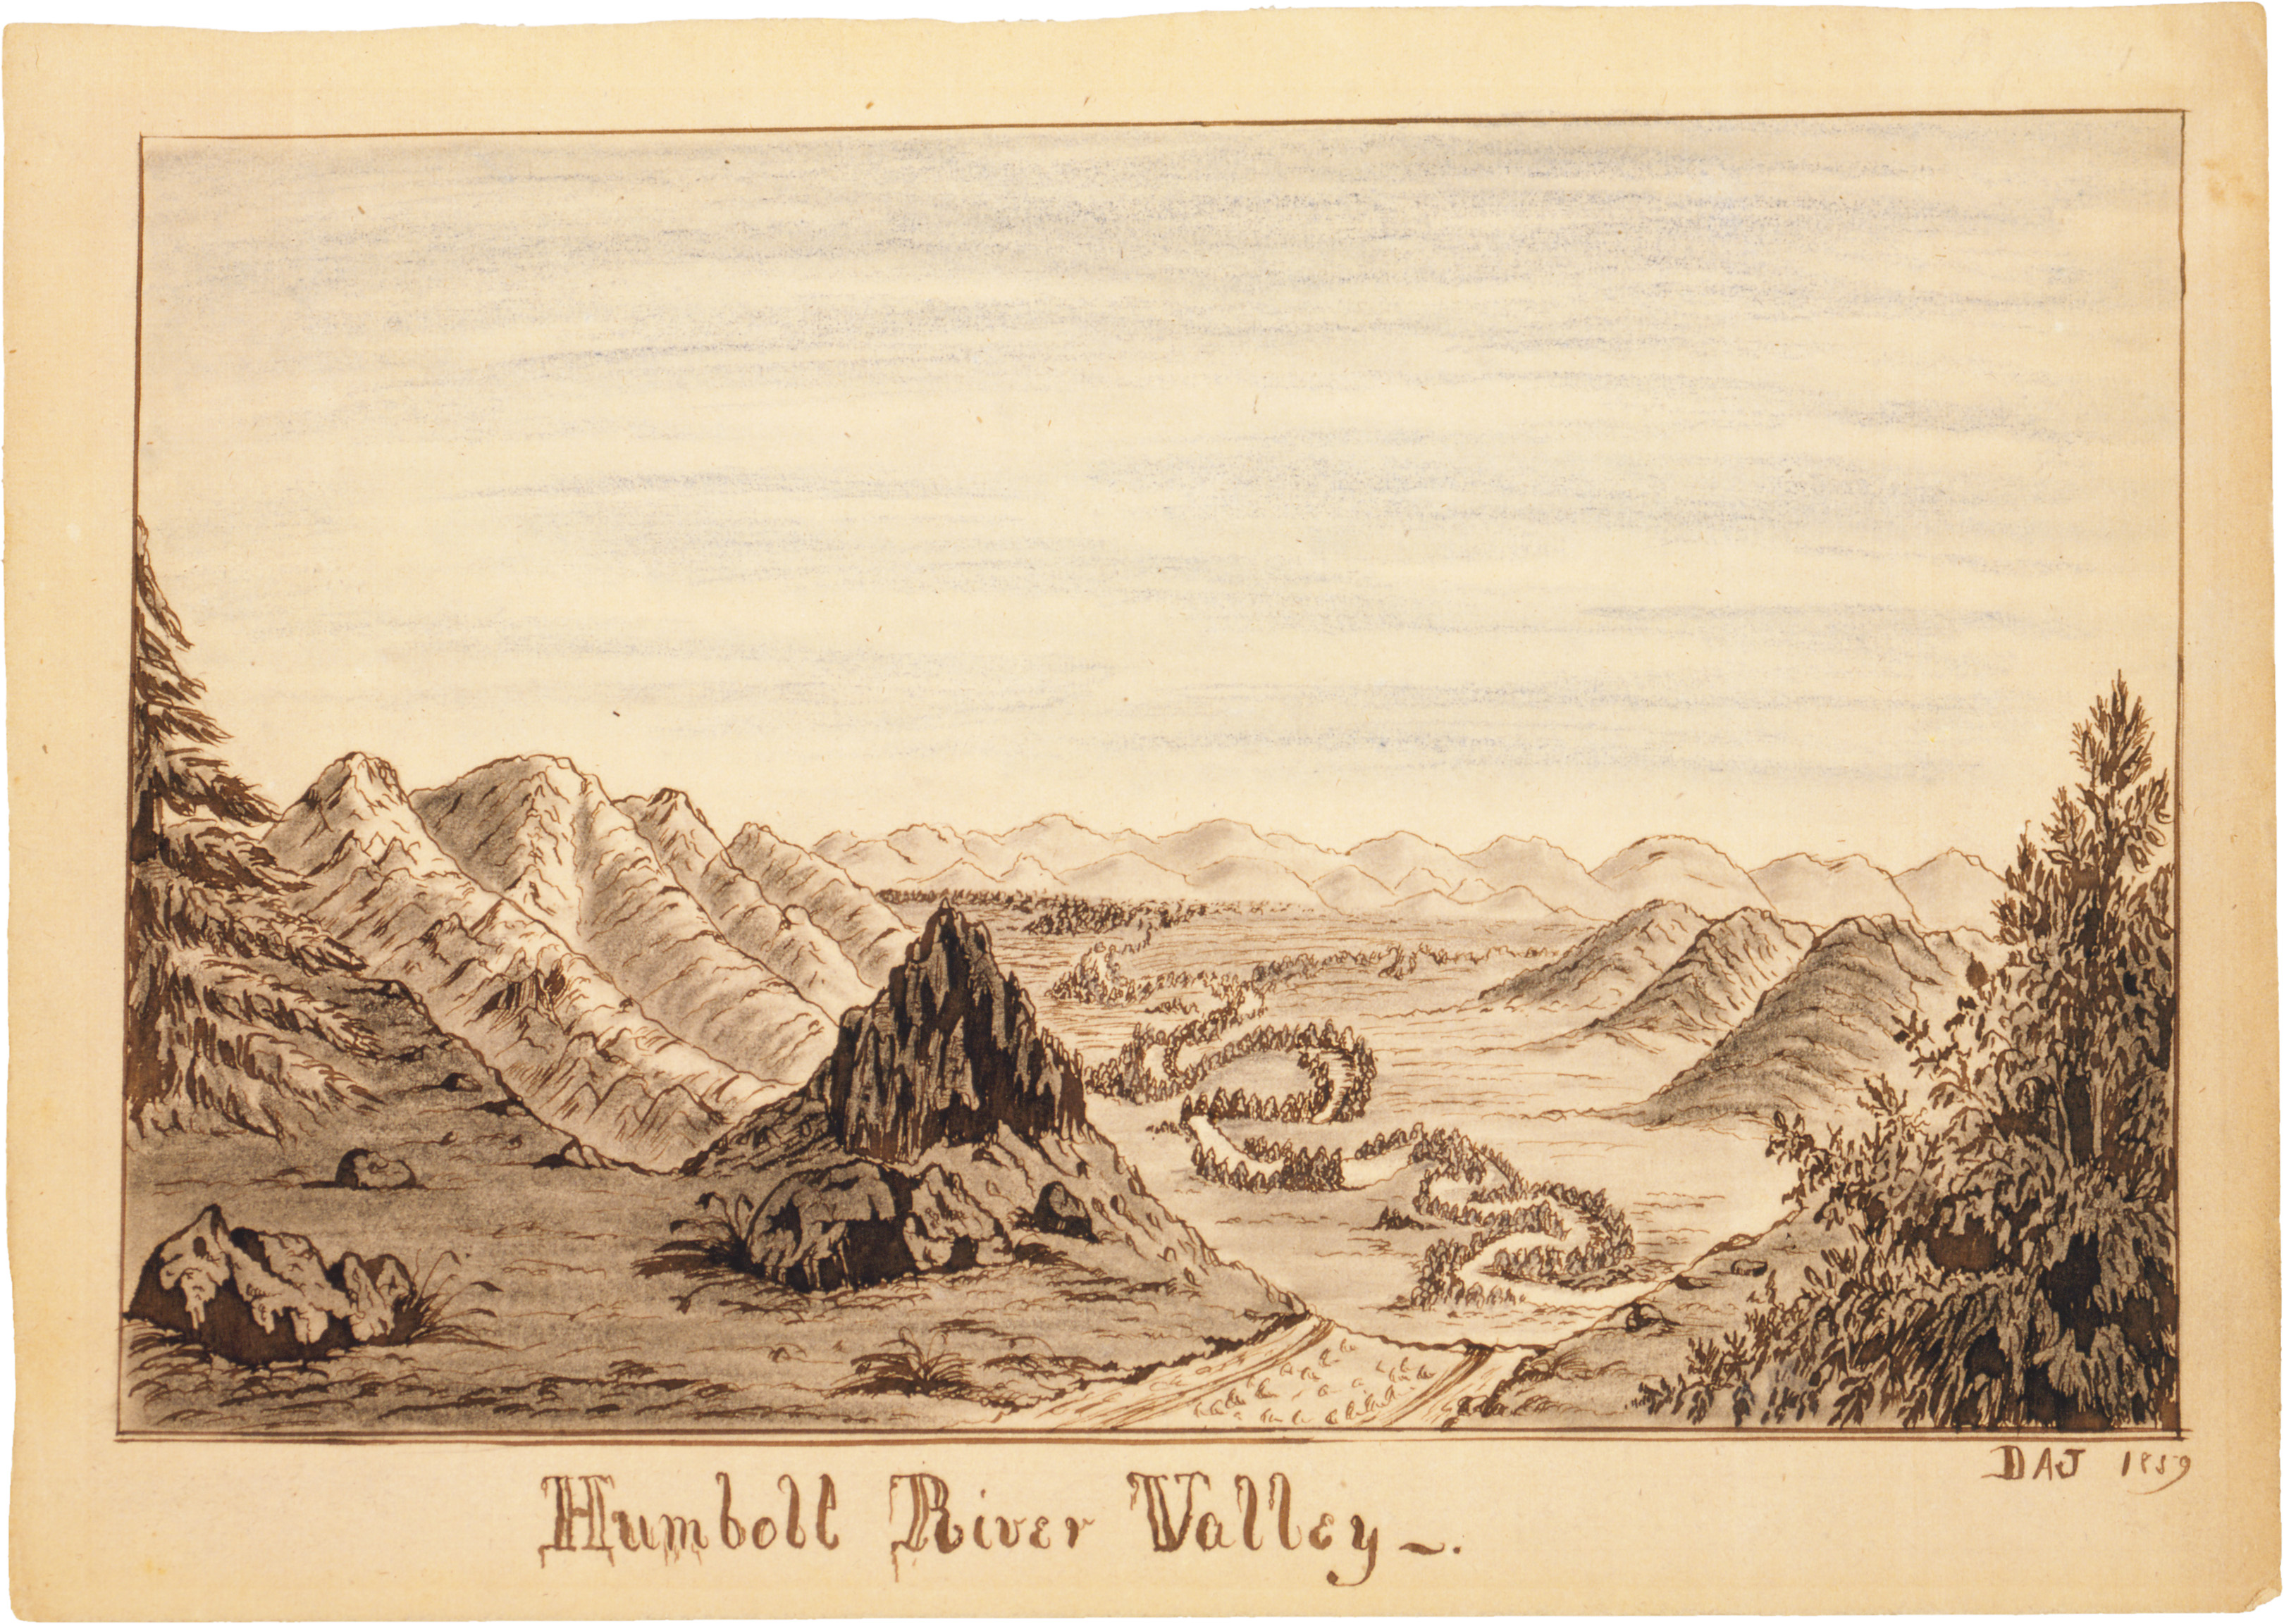 File:Daniel Jenks, Humboldt River Valley, drawing, 1859.jpg